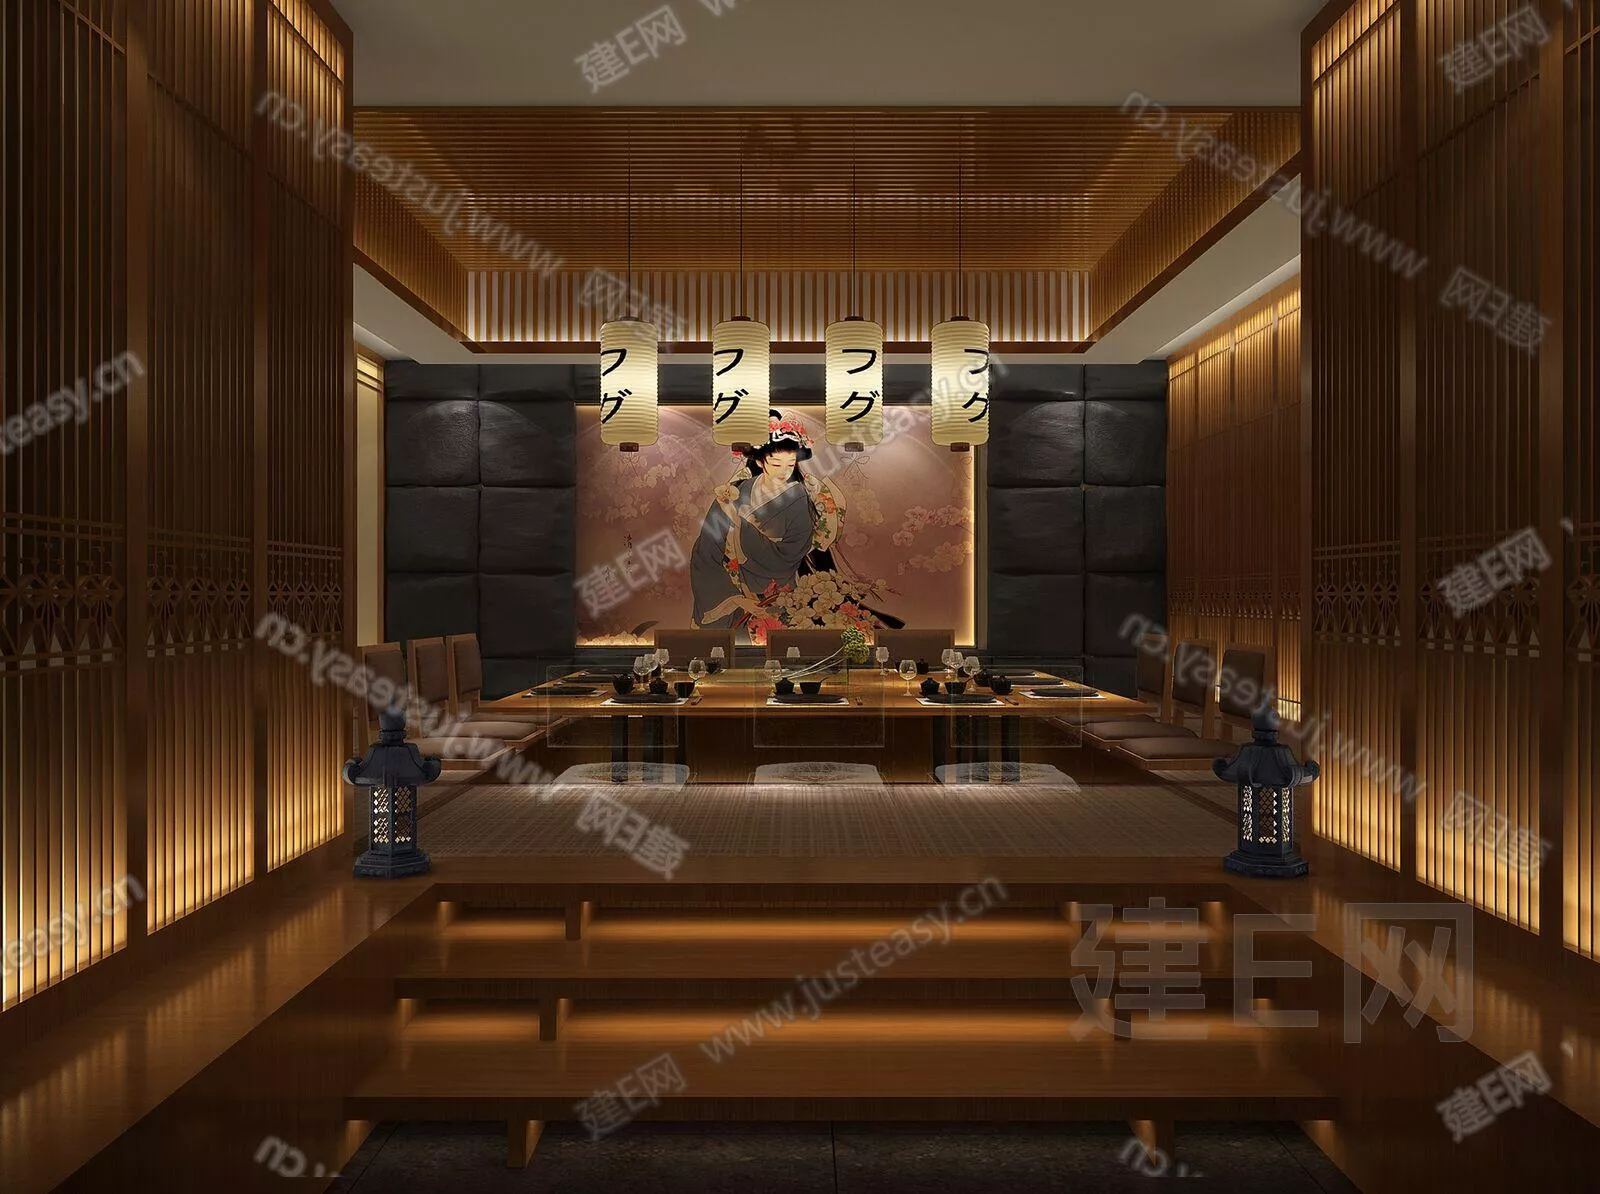 JAPANESE DINING ROOM - SKETCHUP 3D SCENE - ENSCAPE - 107627851